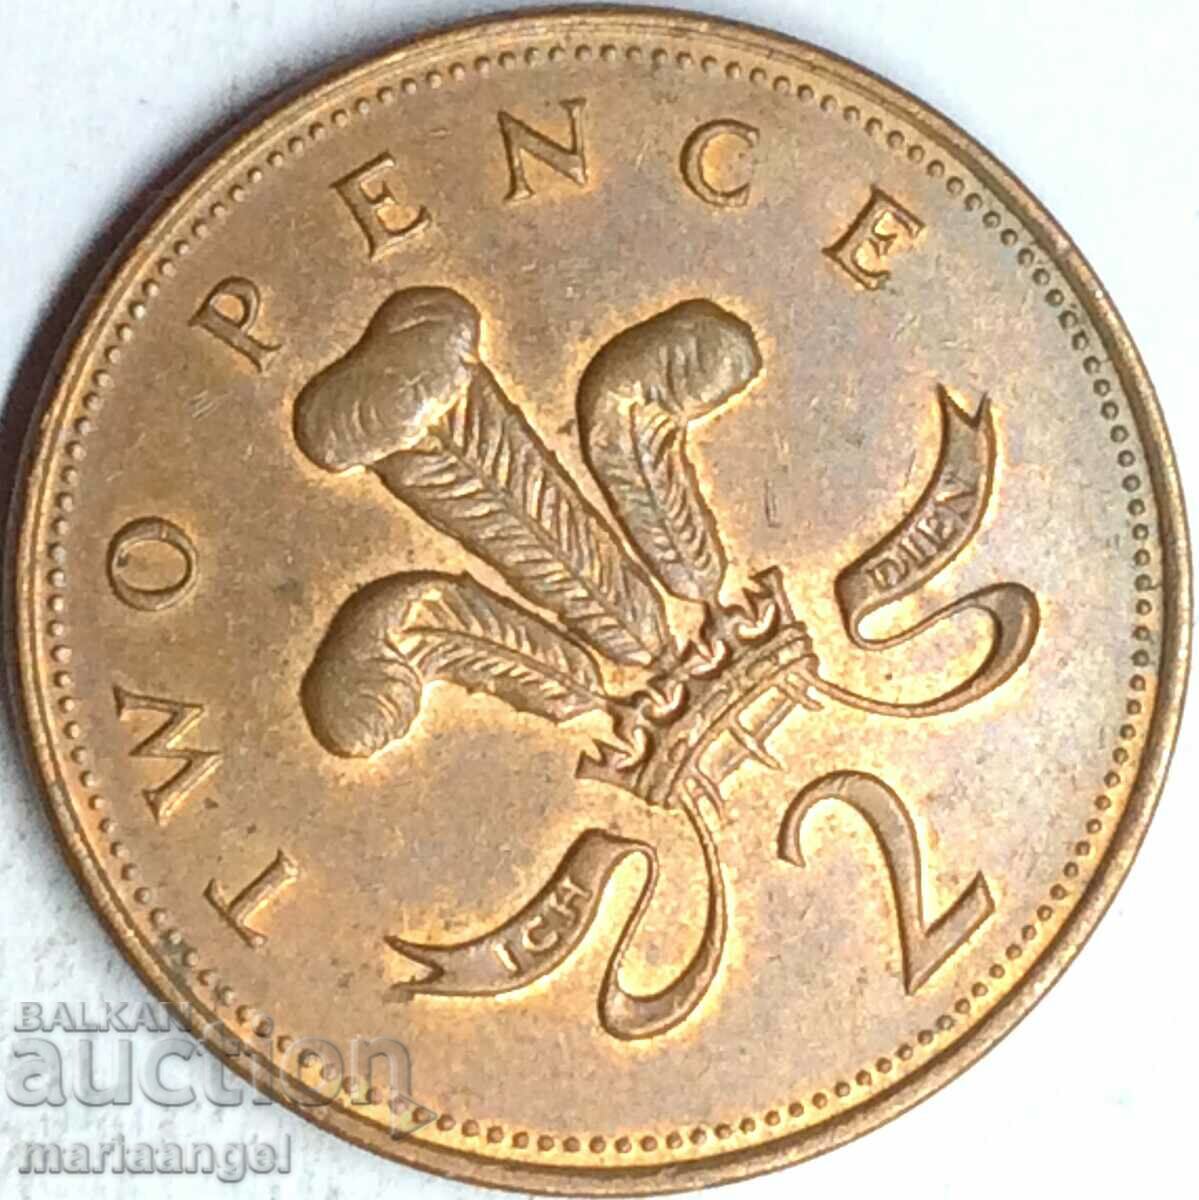 Great Britain 2 pence 1998 Elizabeth II